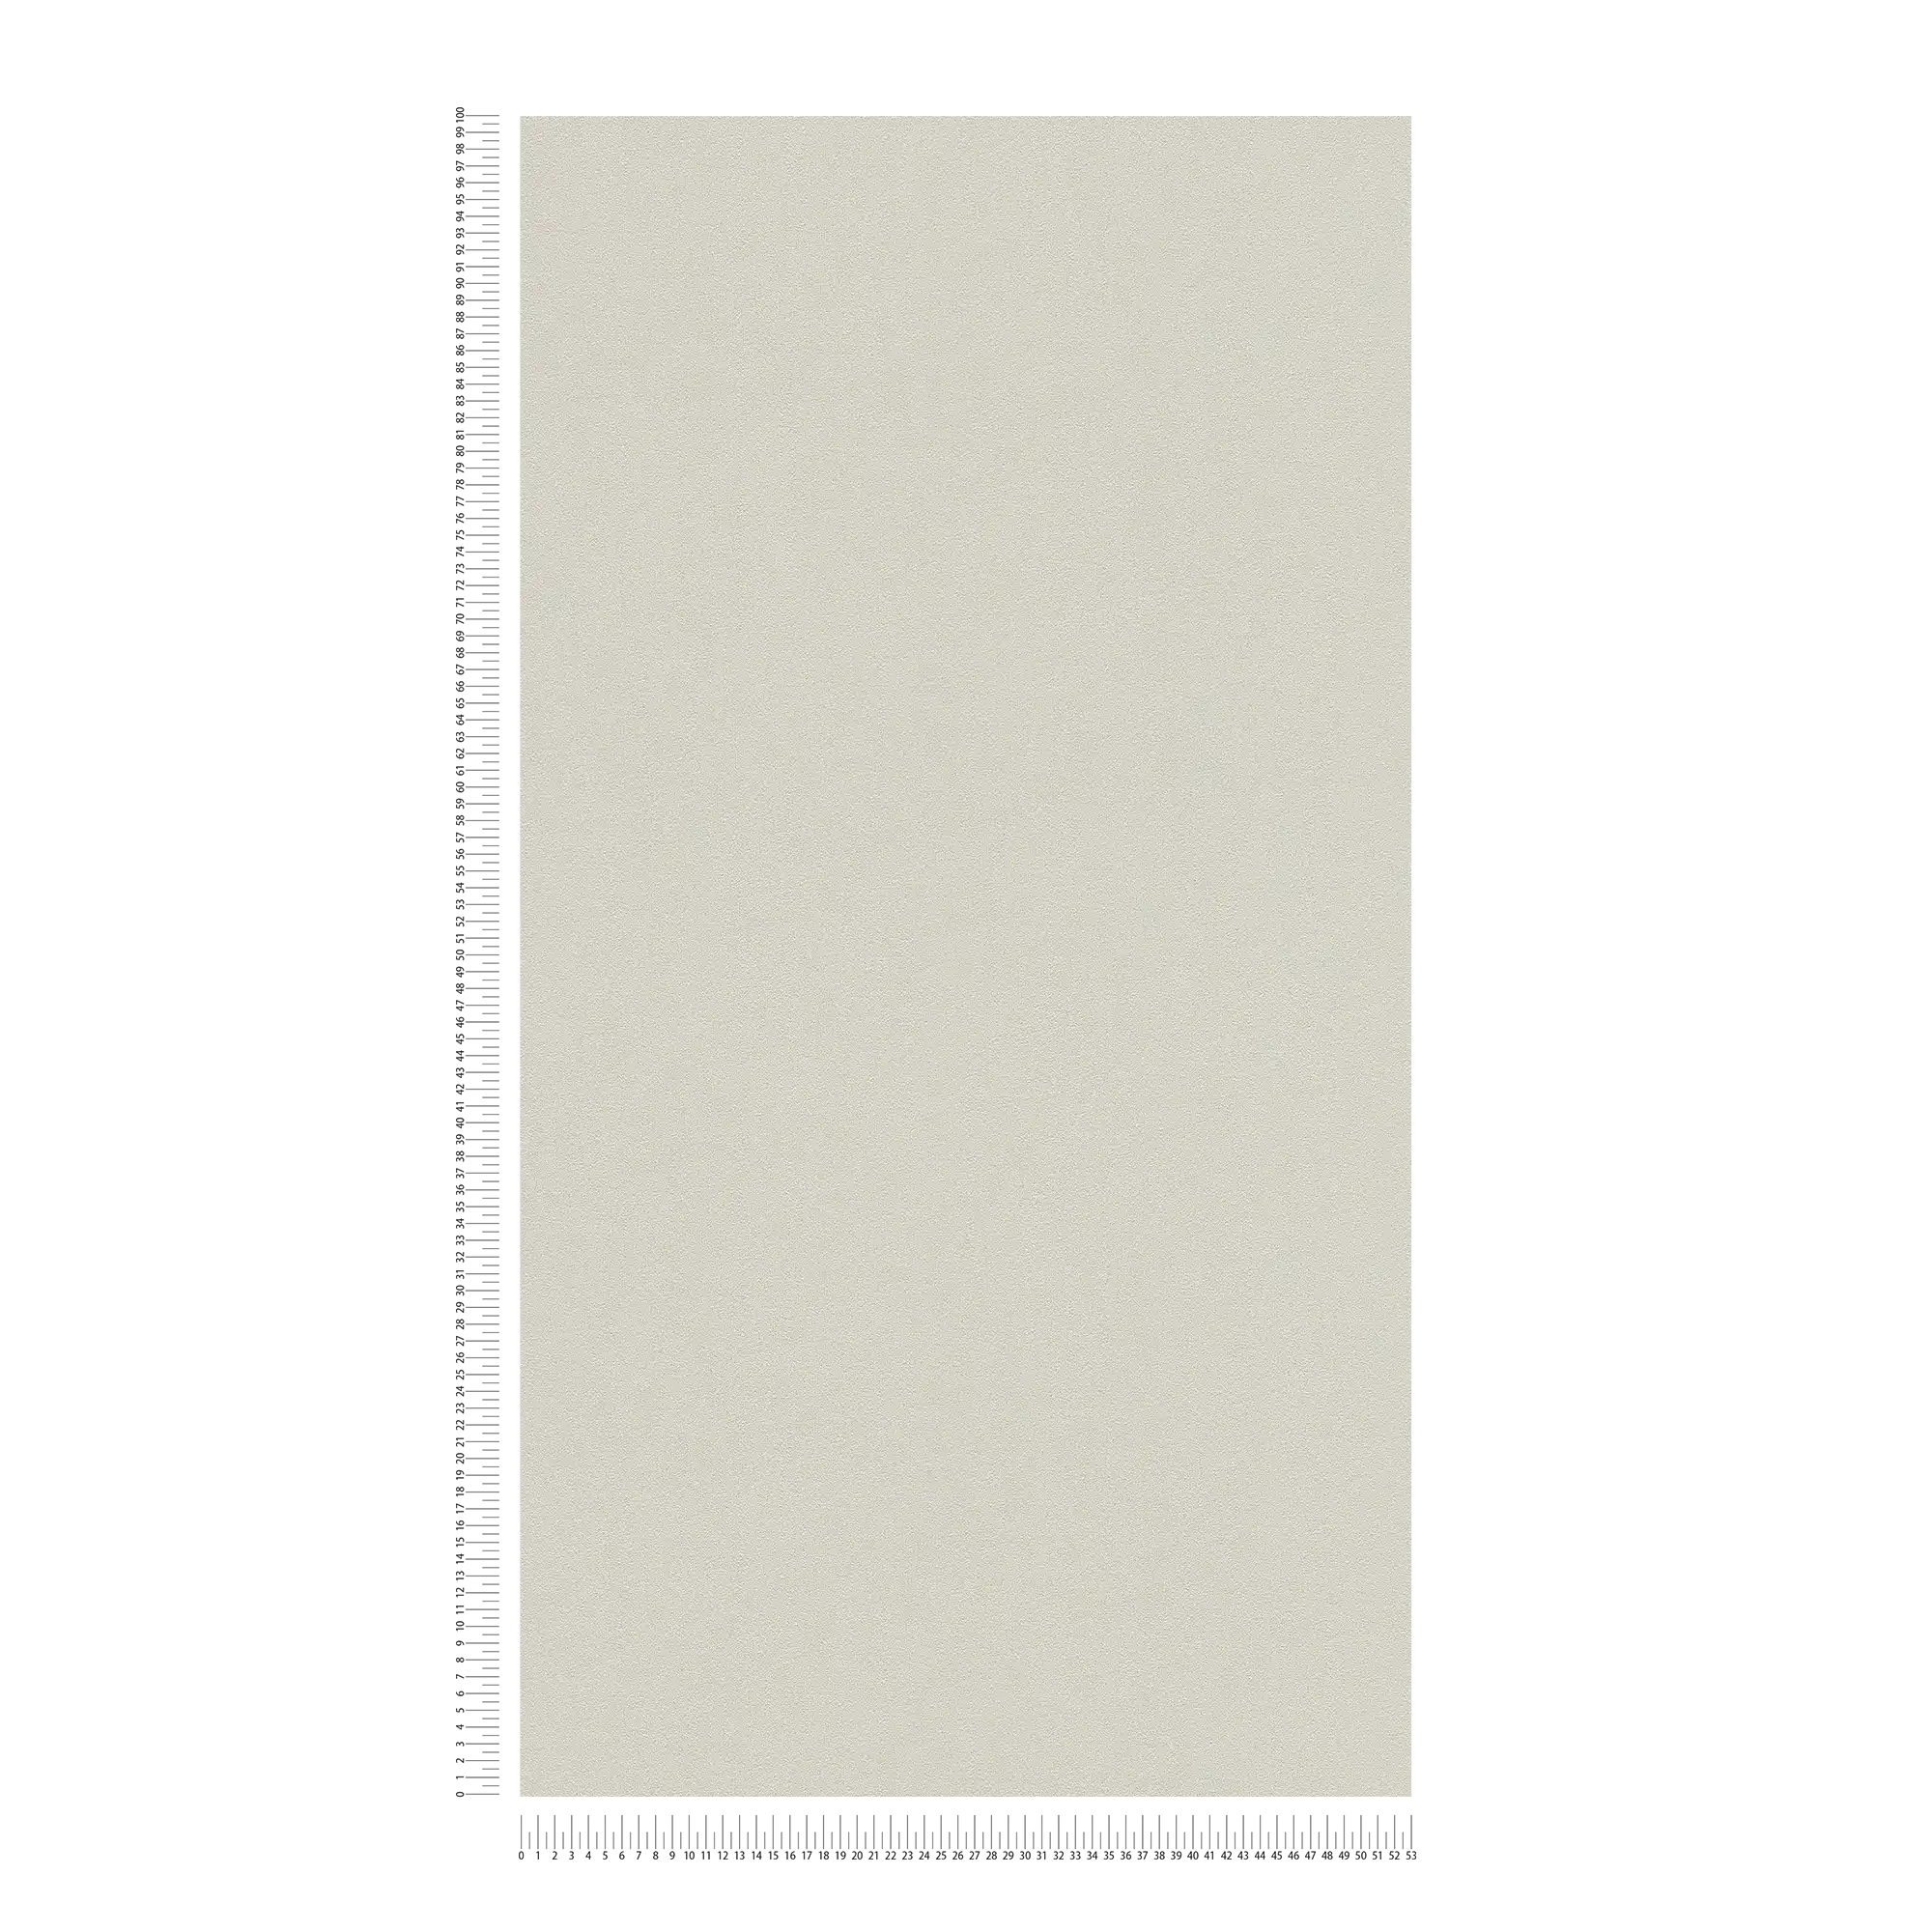             Karl LAGERFELD non-woven wallpaper plain & texture - grey
        